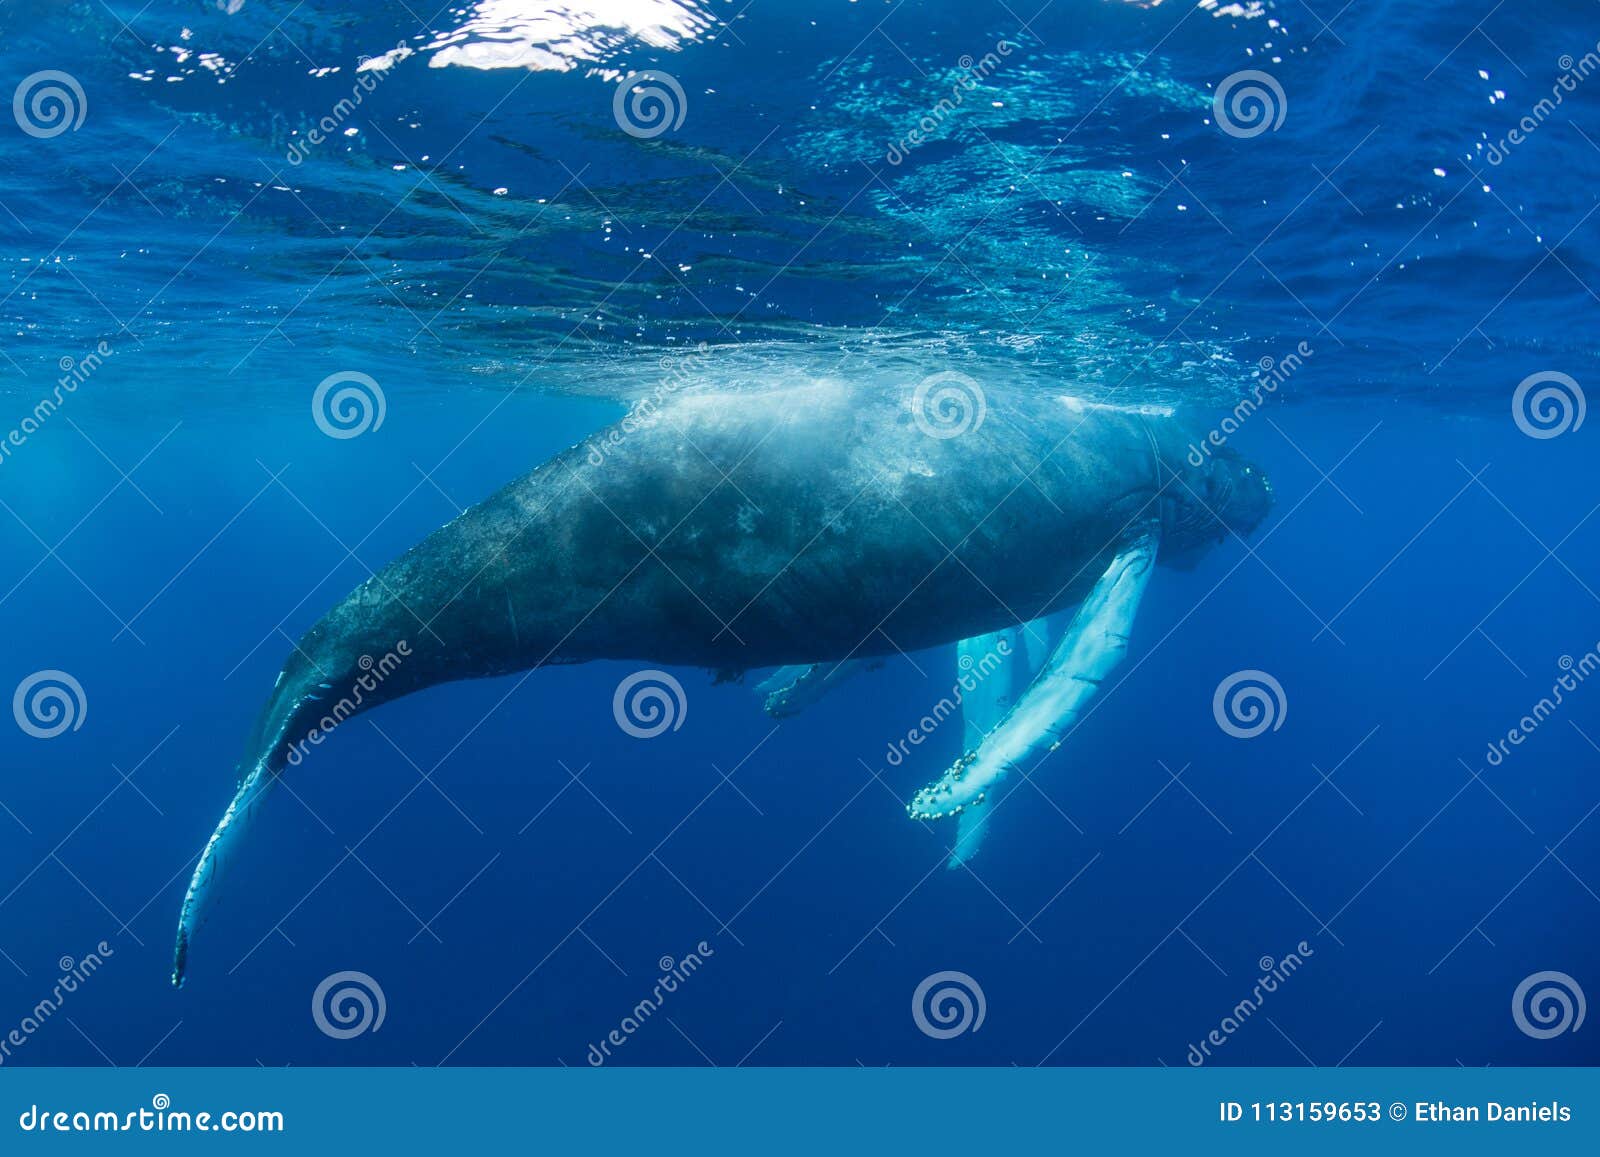 Humpback Whales Swim In The Caribbean Sea Stock Image Image Of Atlantic England 113159653